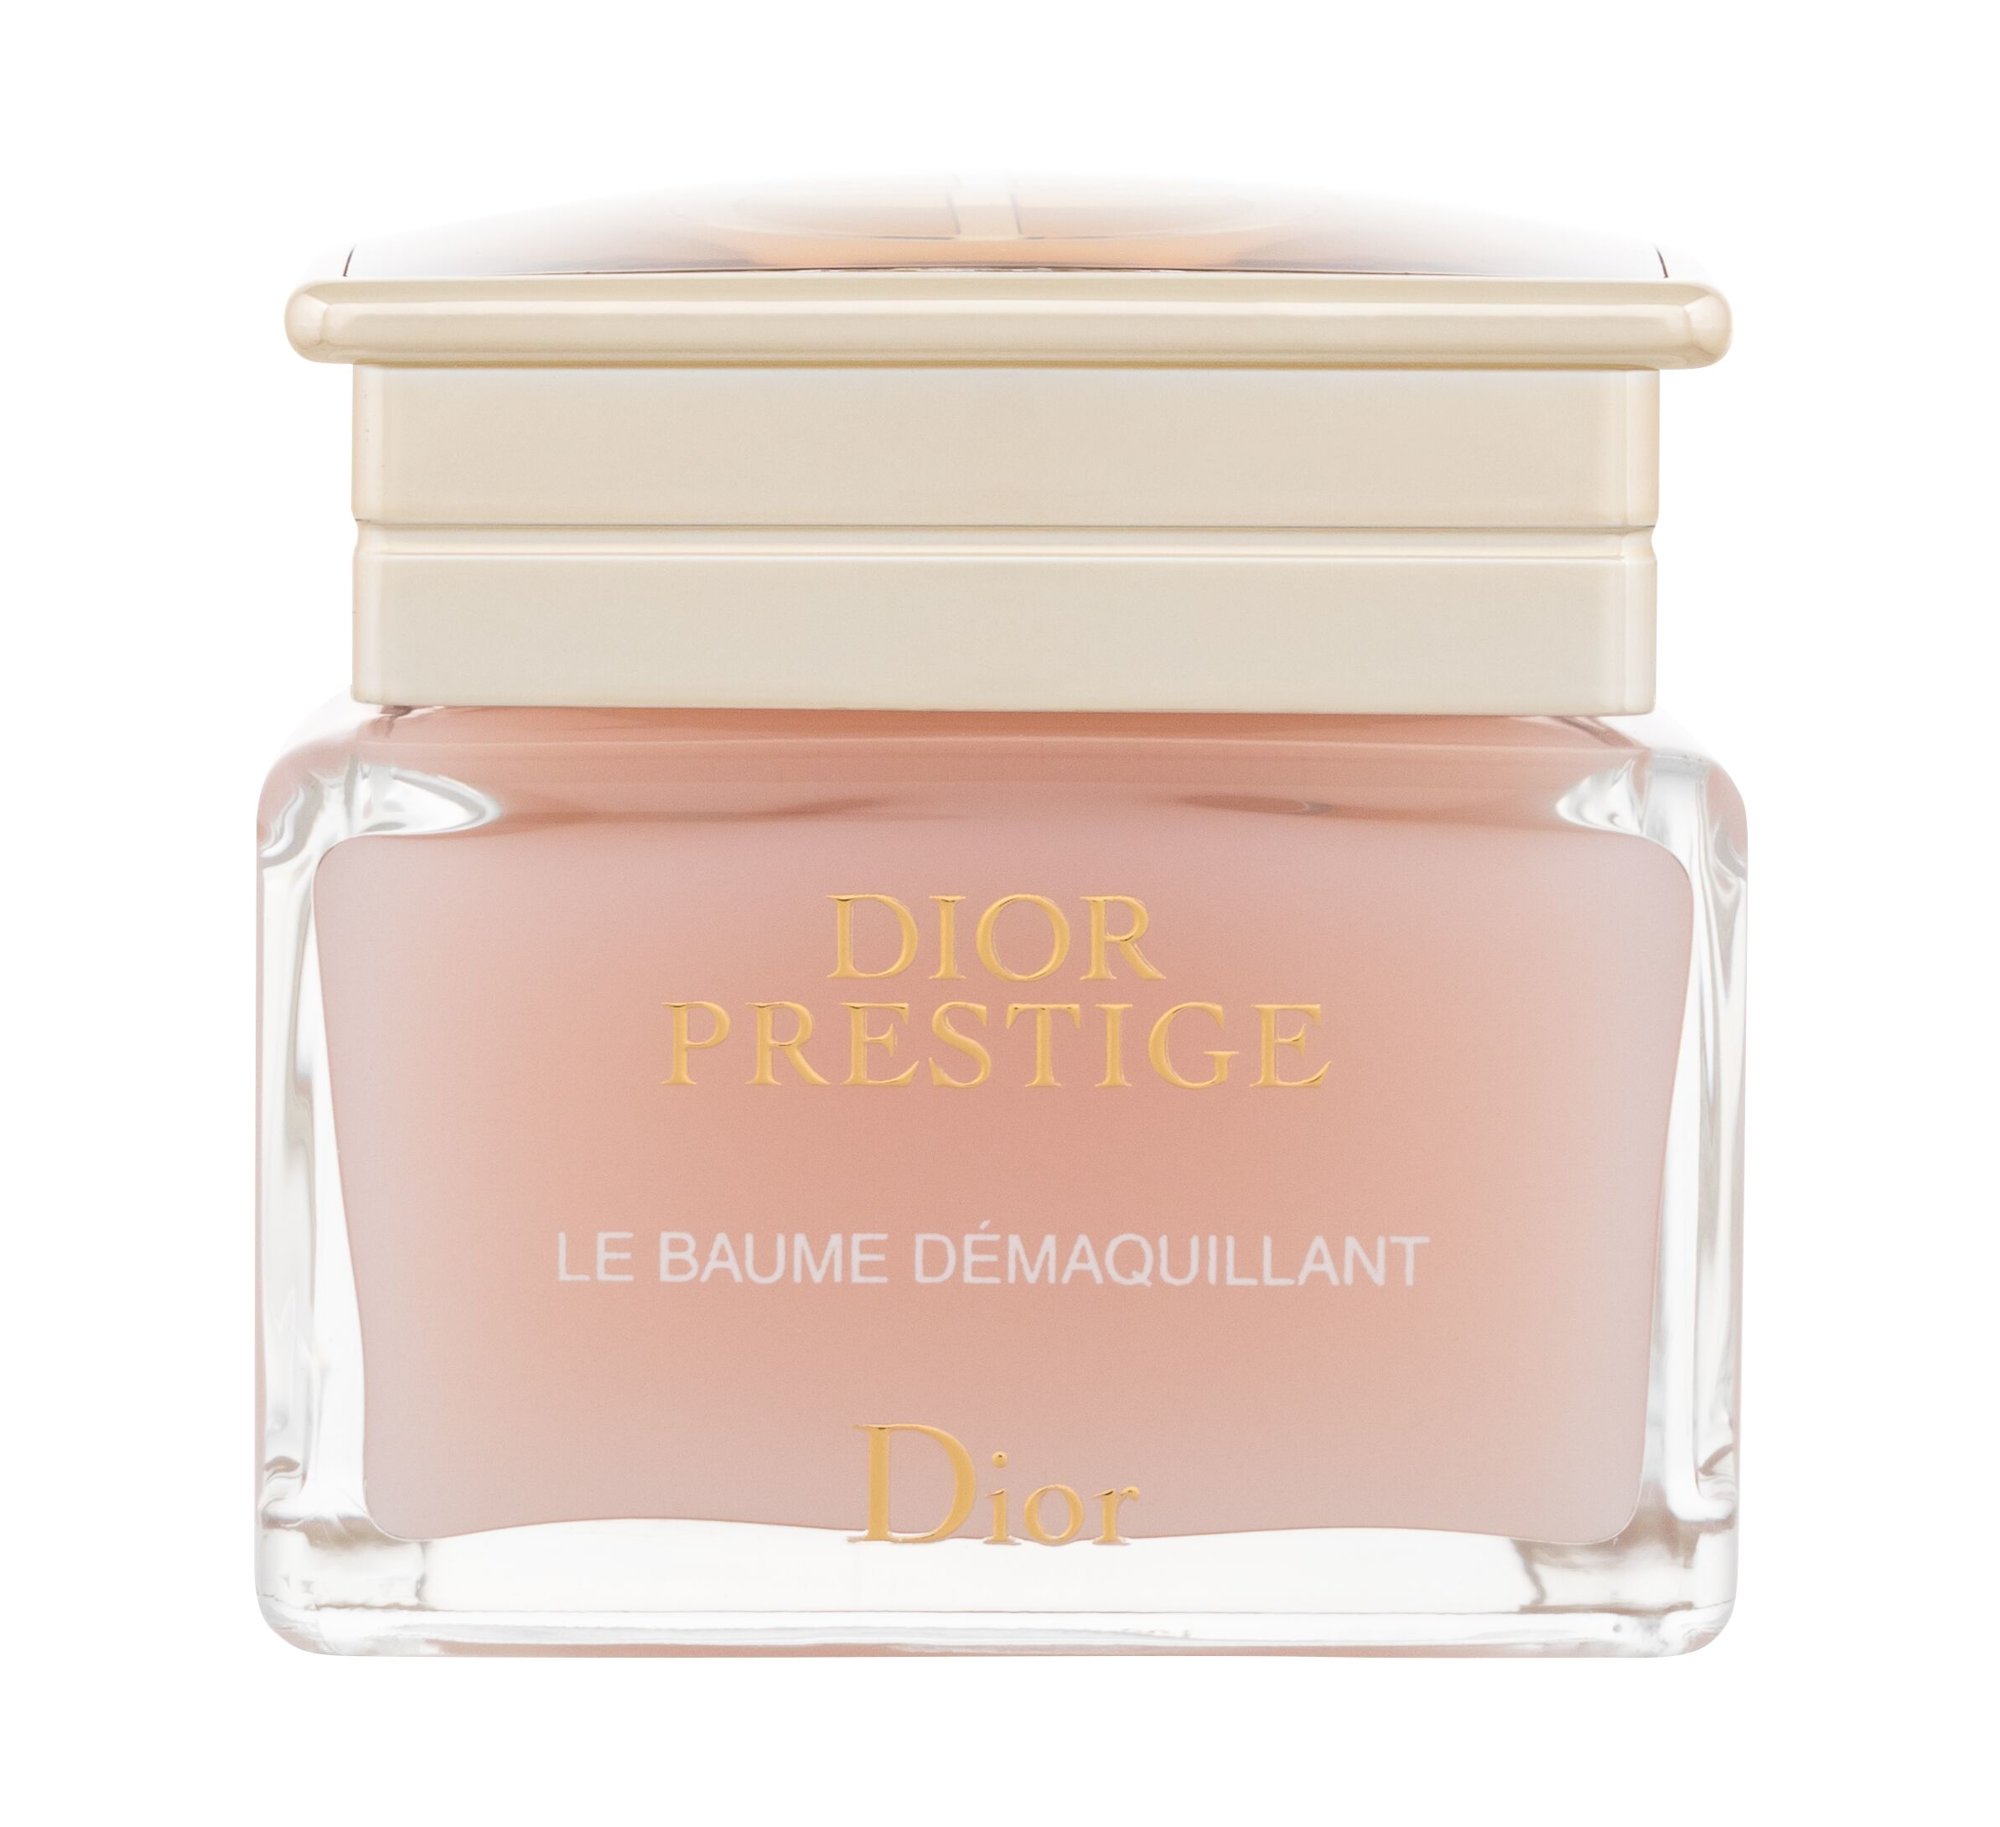 Christian Dior Prestige Le Baume Démaquillant veido valiklis